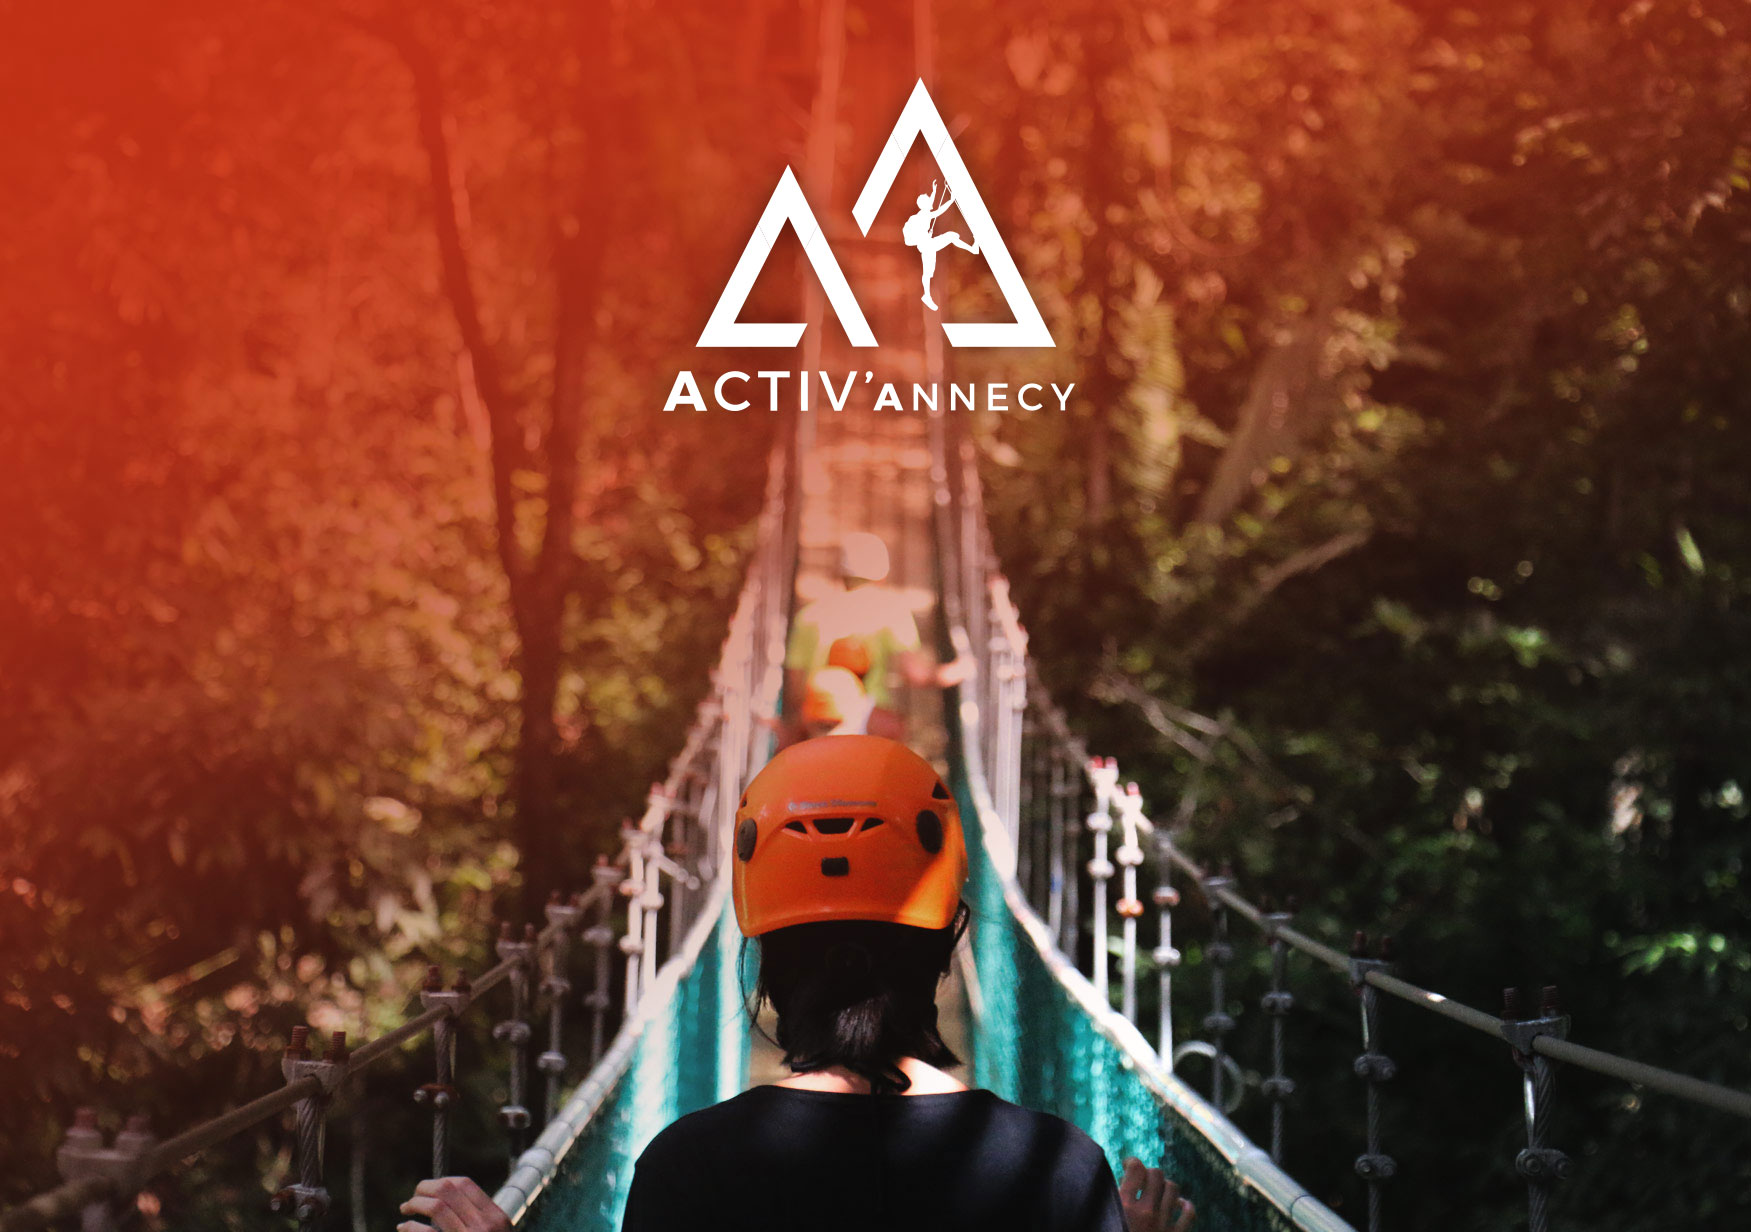 www.activ-annecy.com